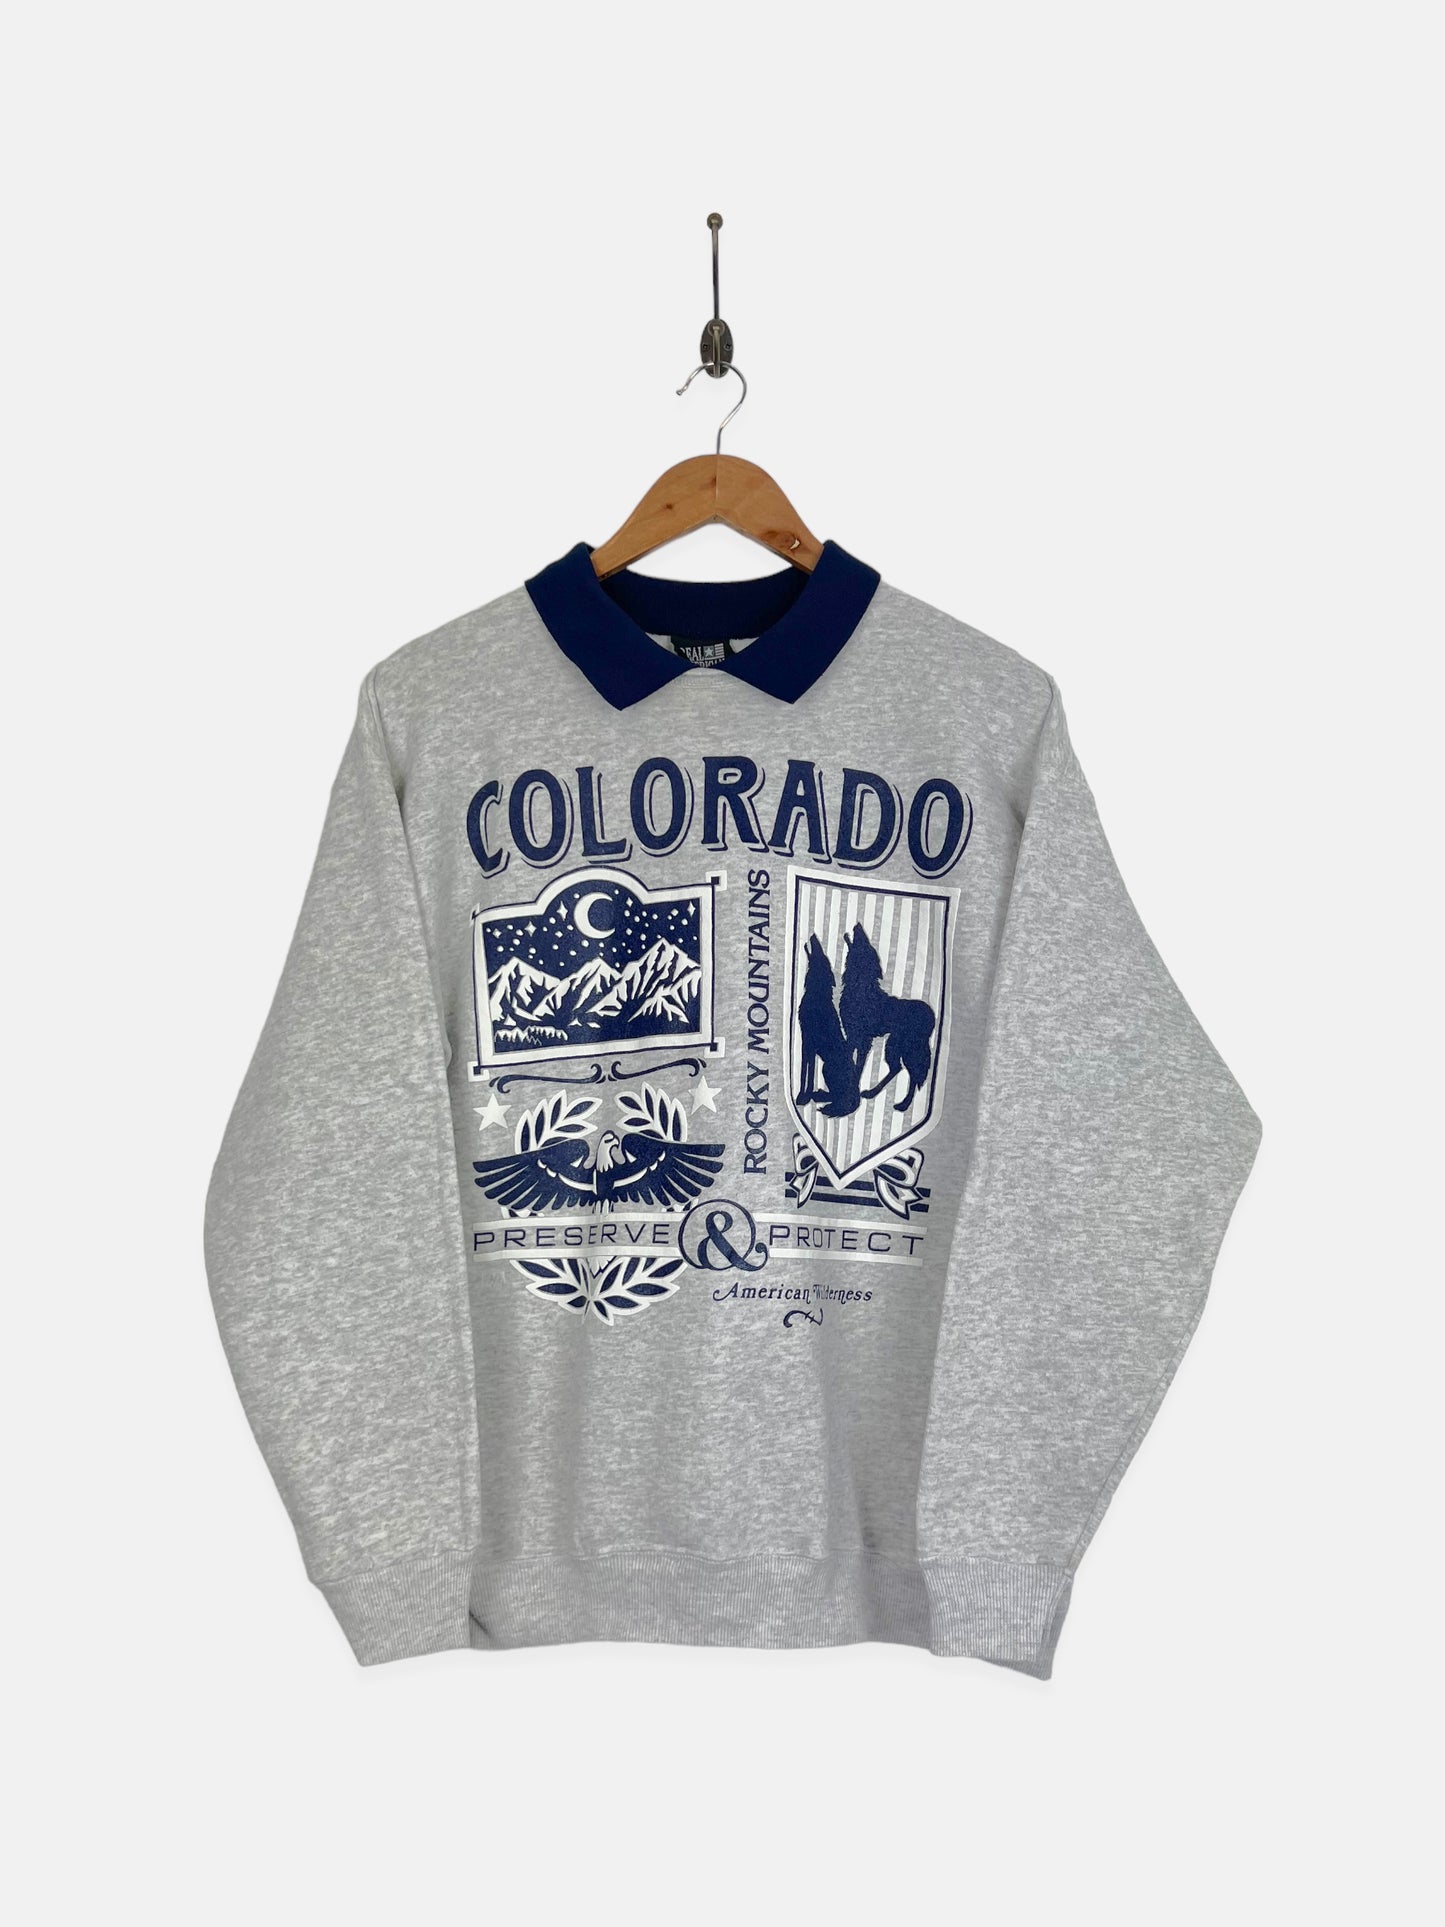 90's Colorado USA Made Vintage Collared Sweatshirt Size 10